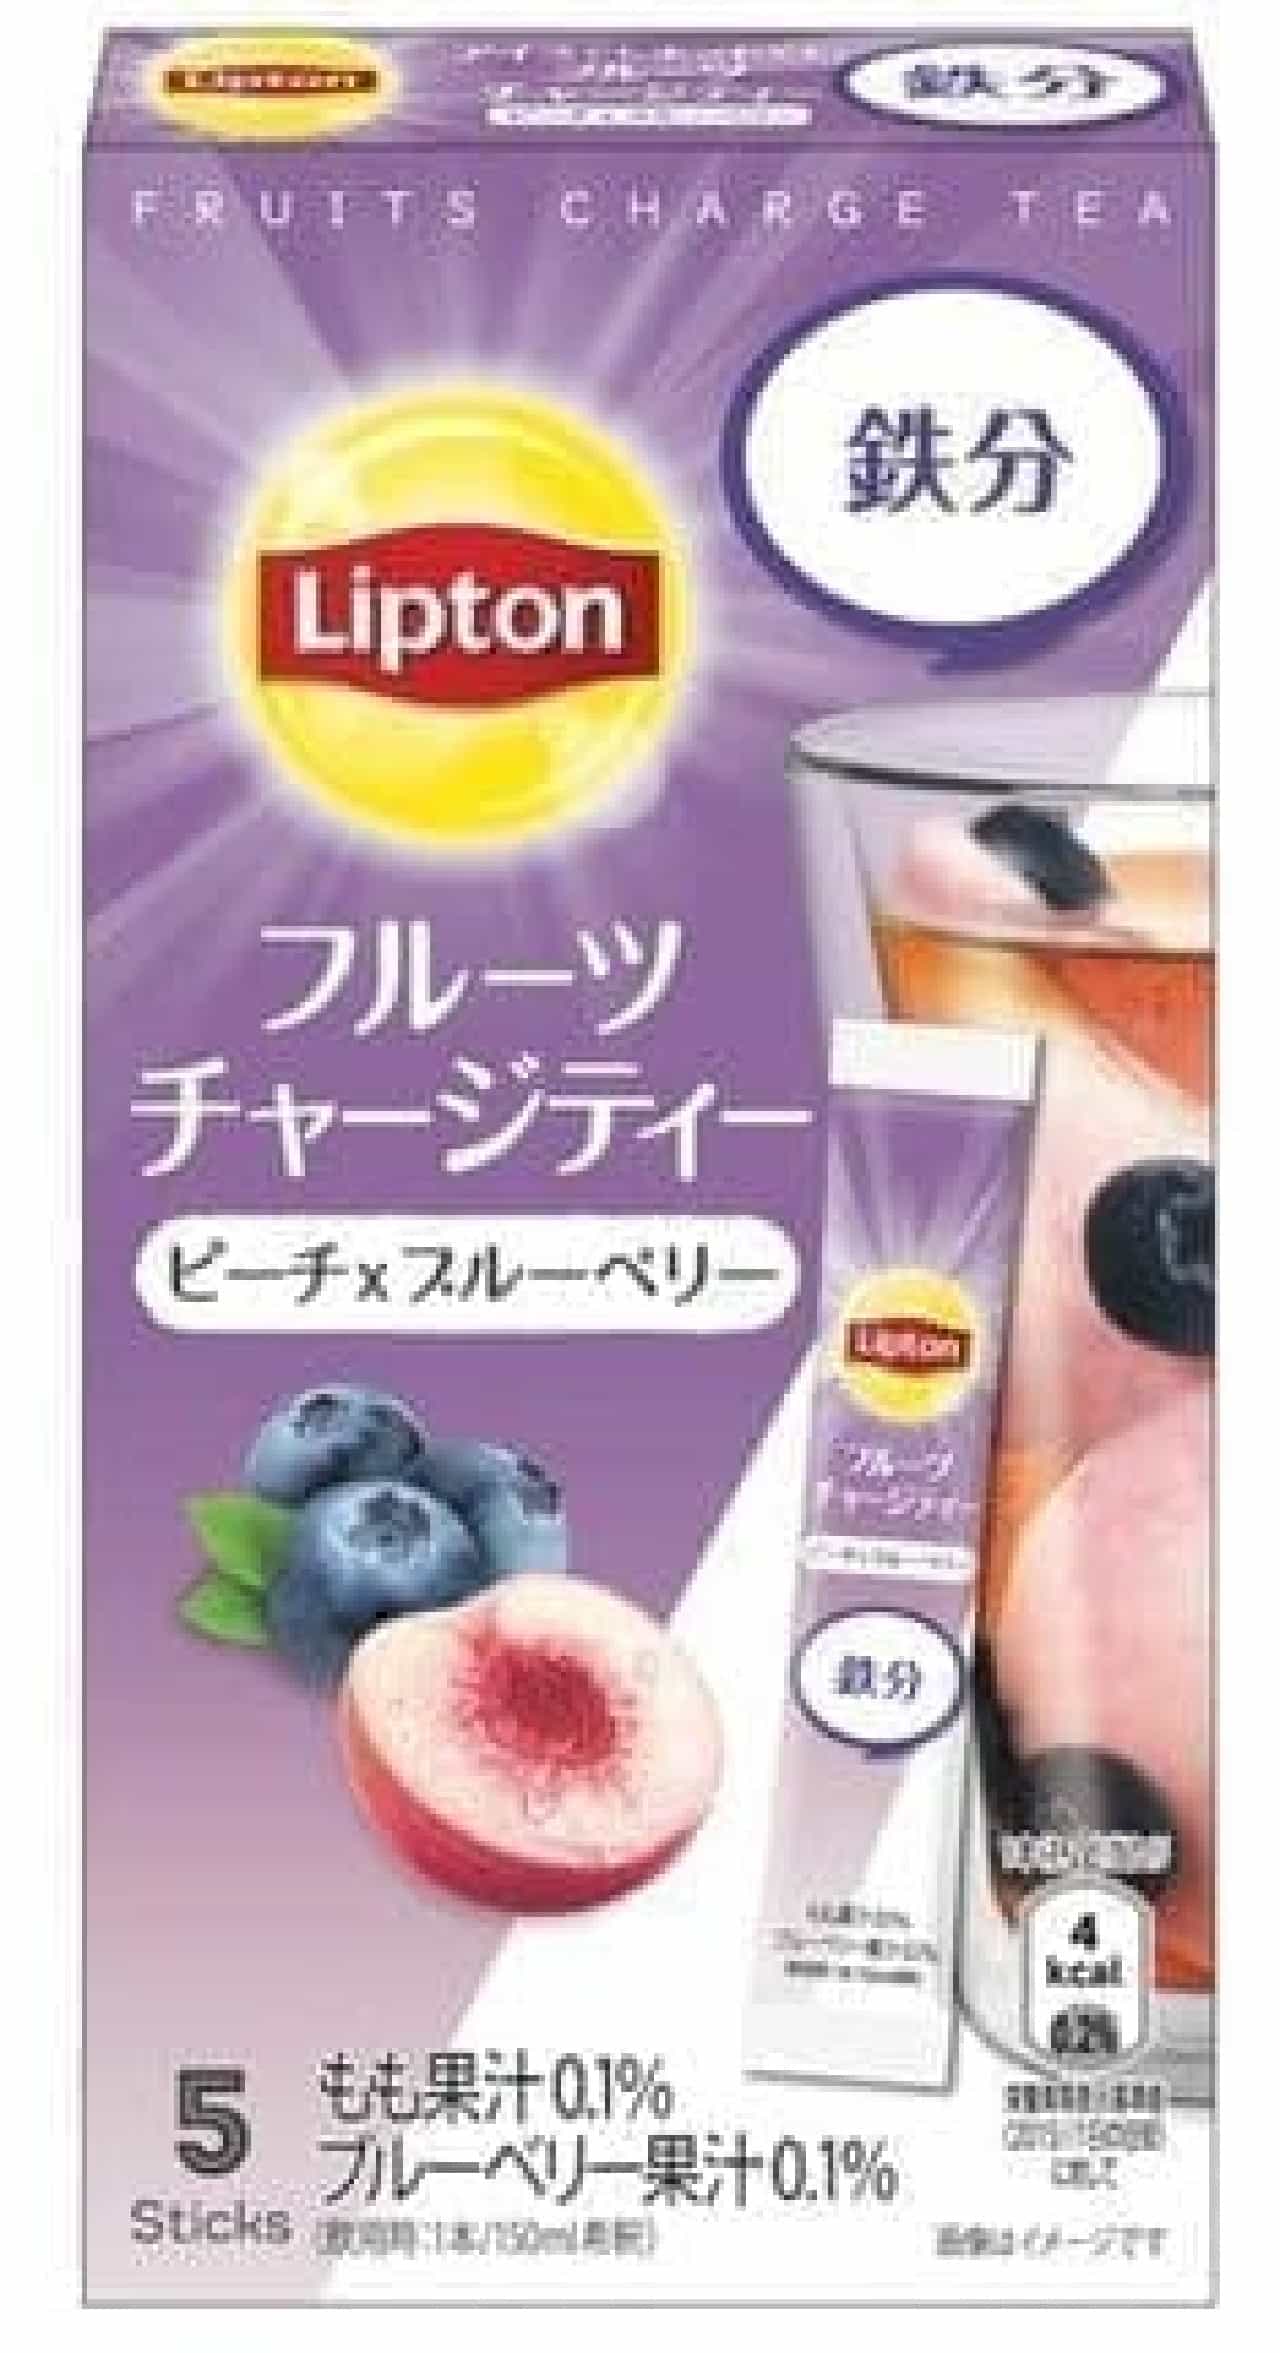 Lipton Fruit Charge Tea Stick Peach & Blueberry